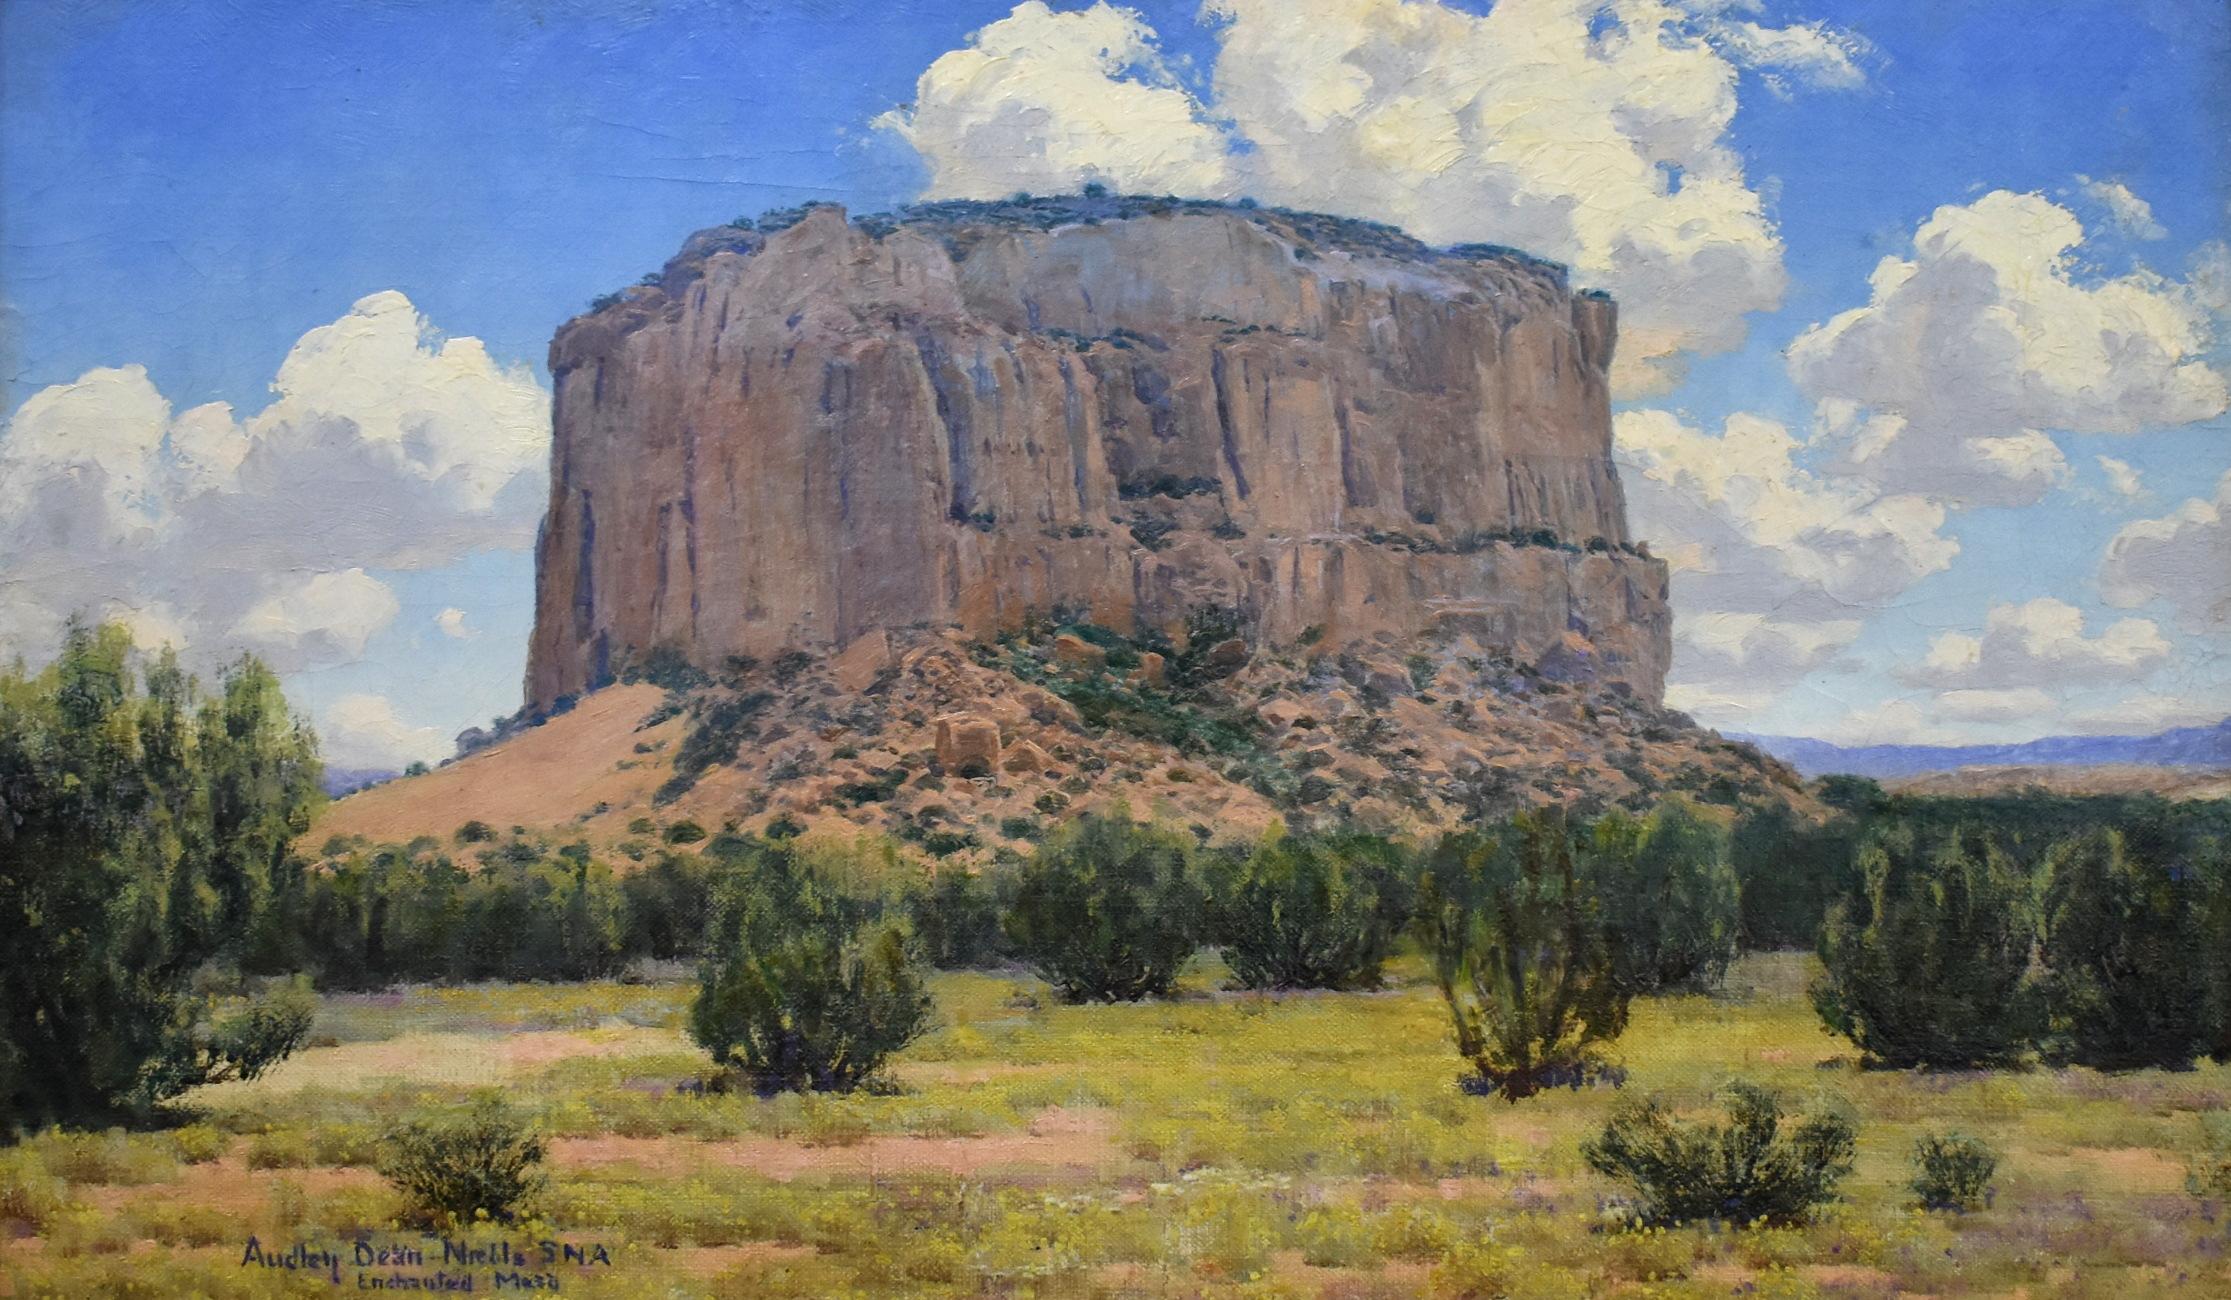 Audley Dean Nicols Landscape Painting - "Enchanted Mesa"  New Mexio Subject by El Paso Texas Artist